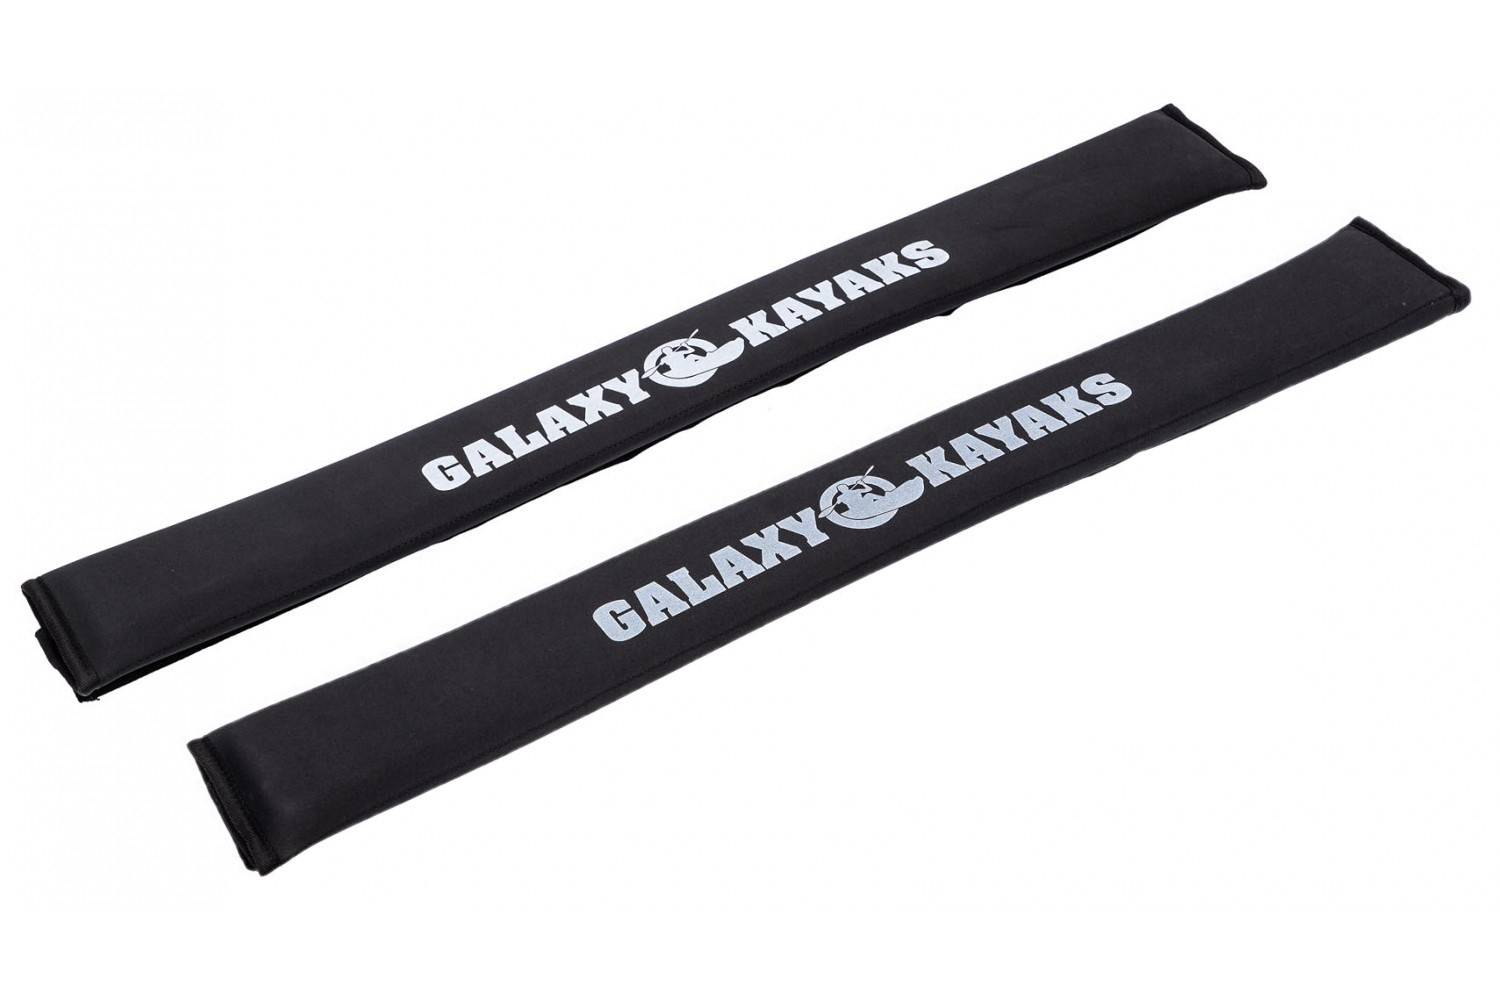 Protector bacas neopreno Galaxy Kayaks